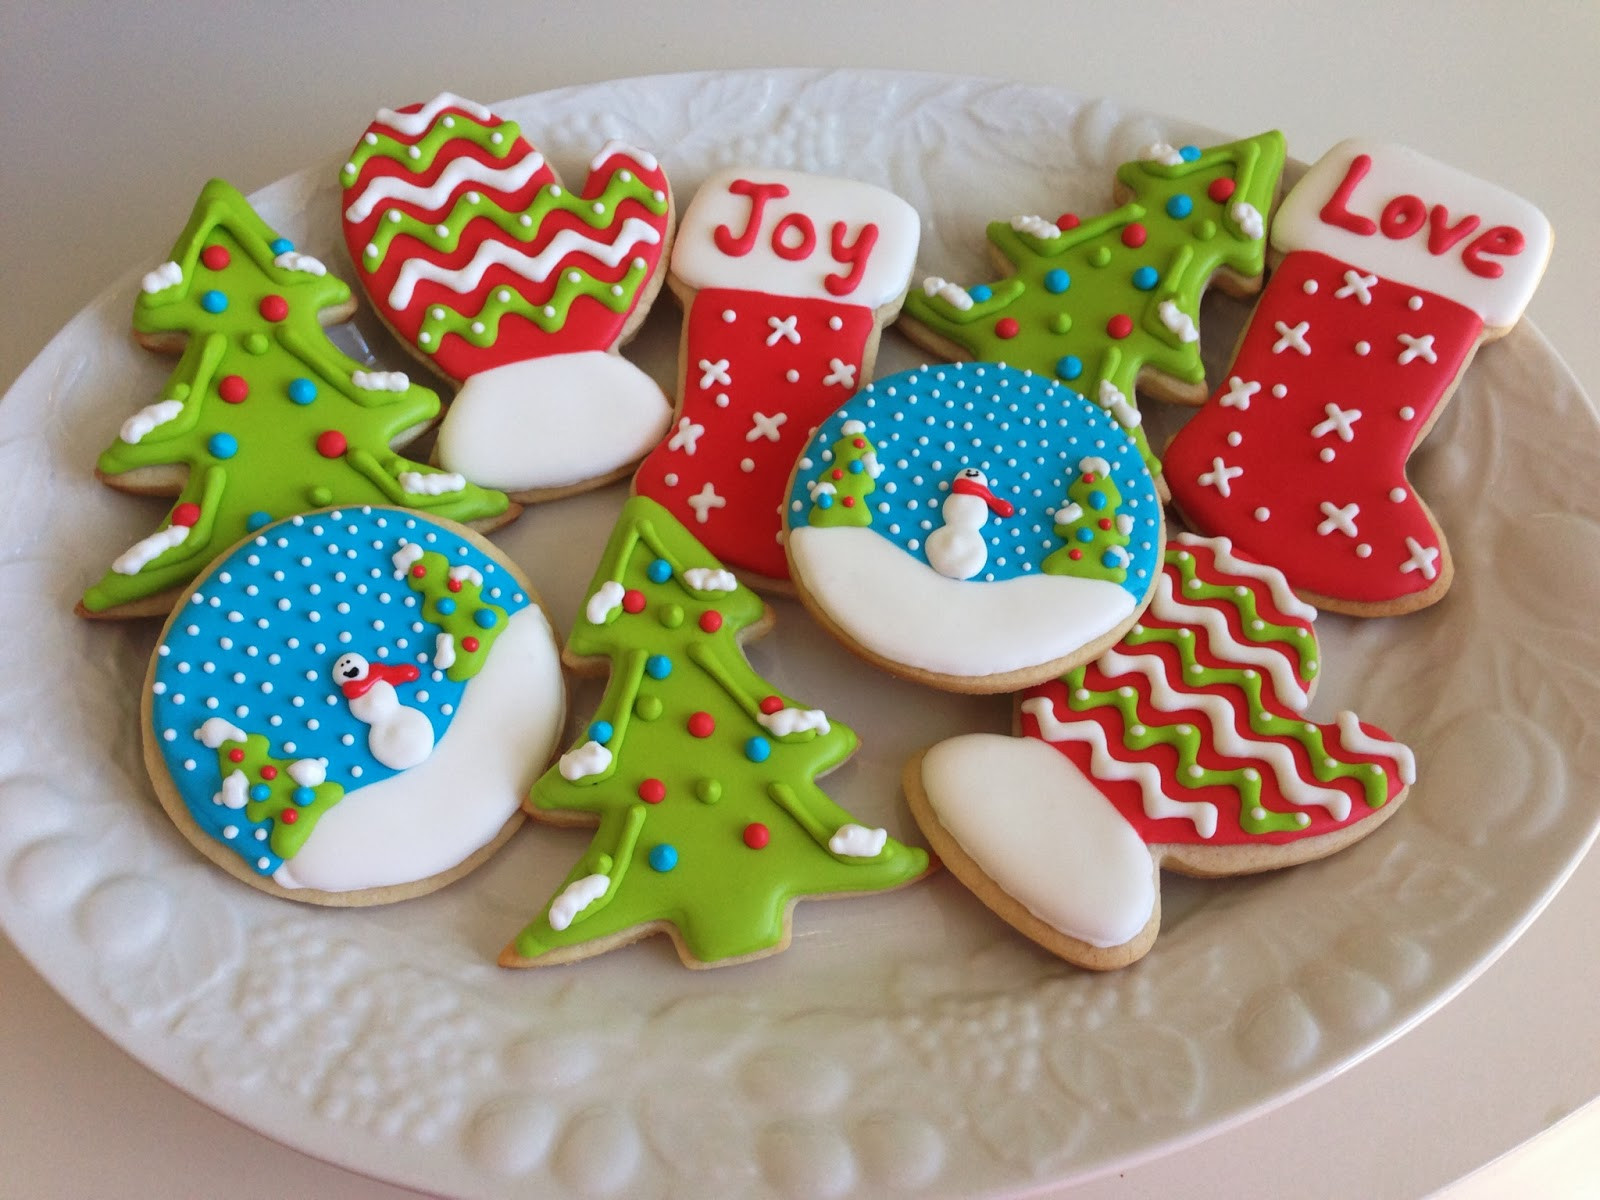 Decorated Christmas Sugar Cookies
 monograms & cake Christmas Cut Out Sugar Cookies with